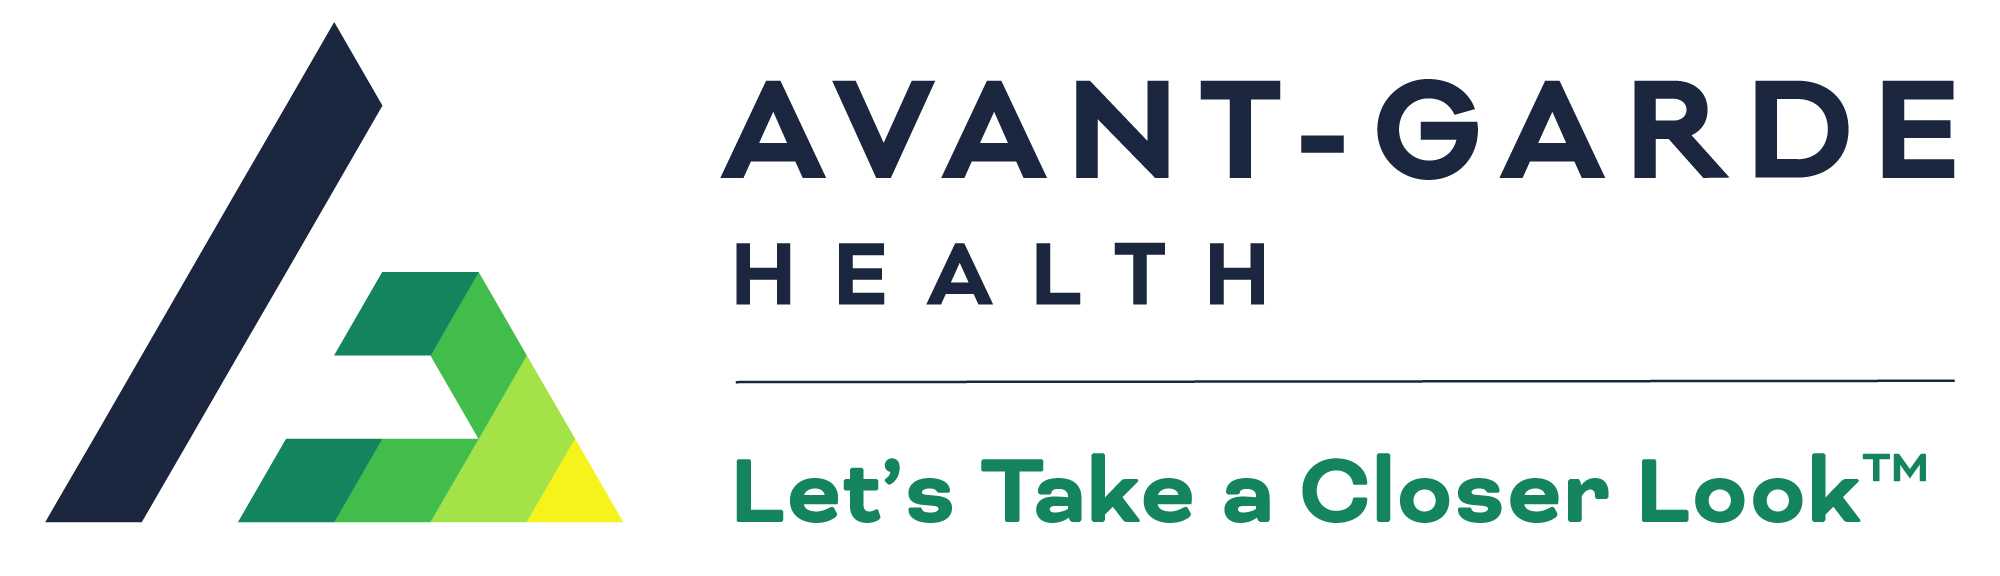 Avant-garde Health logo